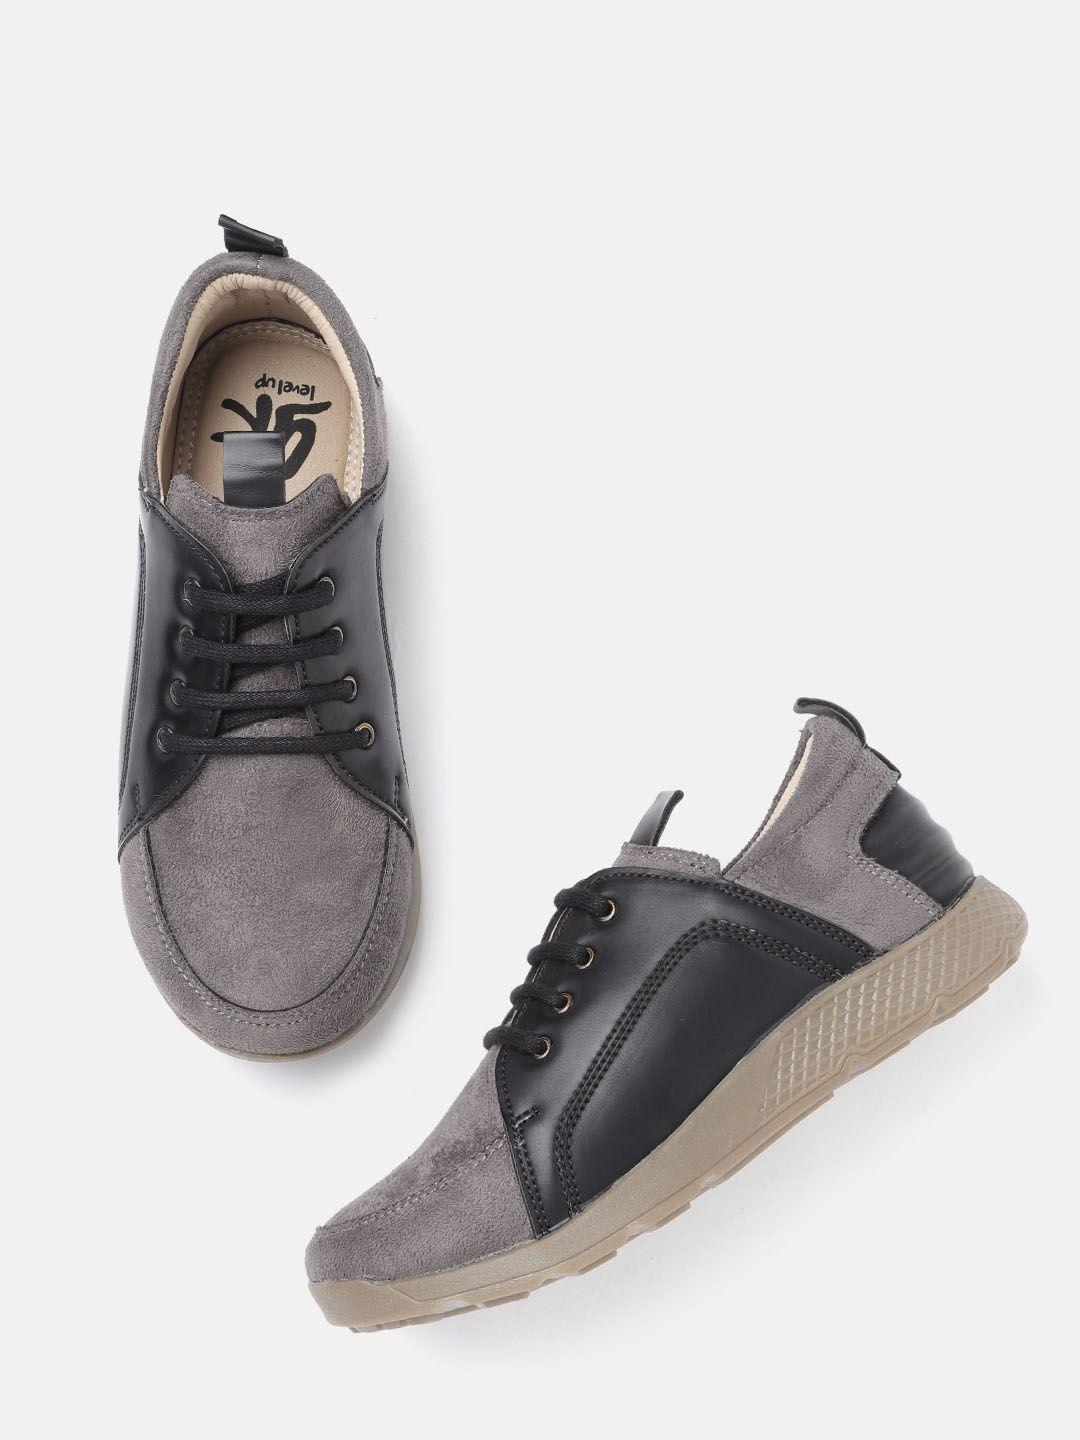 yk boys charcoal grey & black colourblocked sneakers